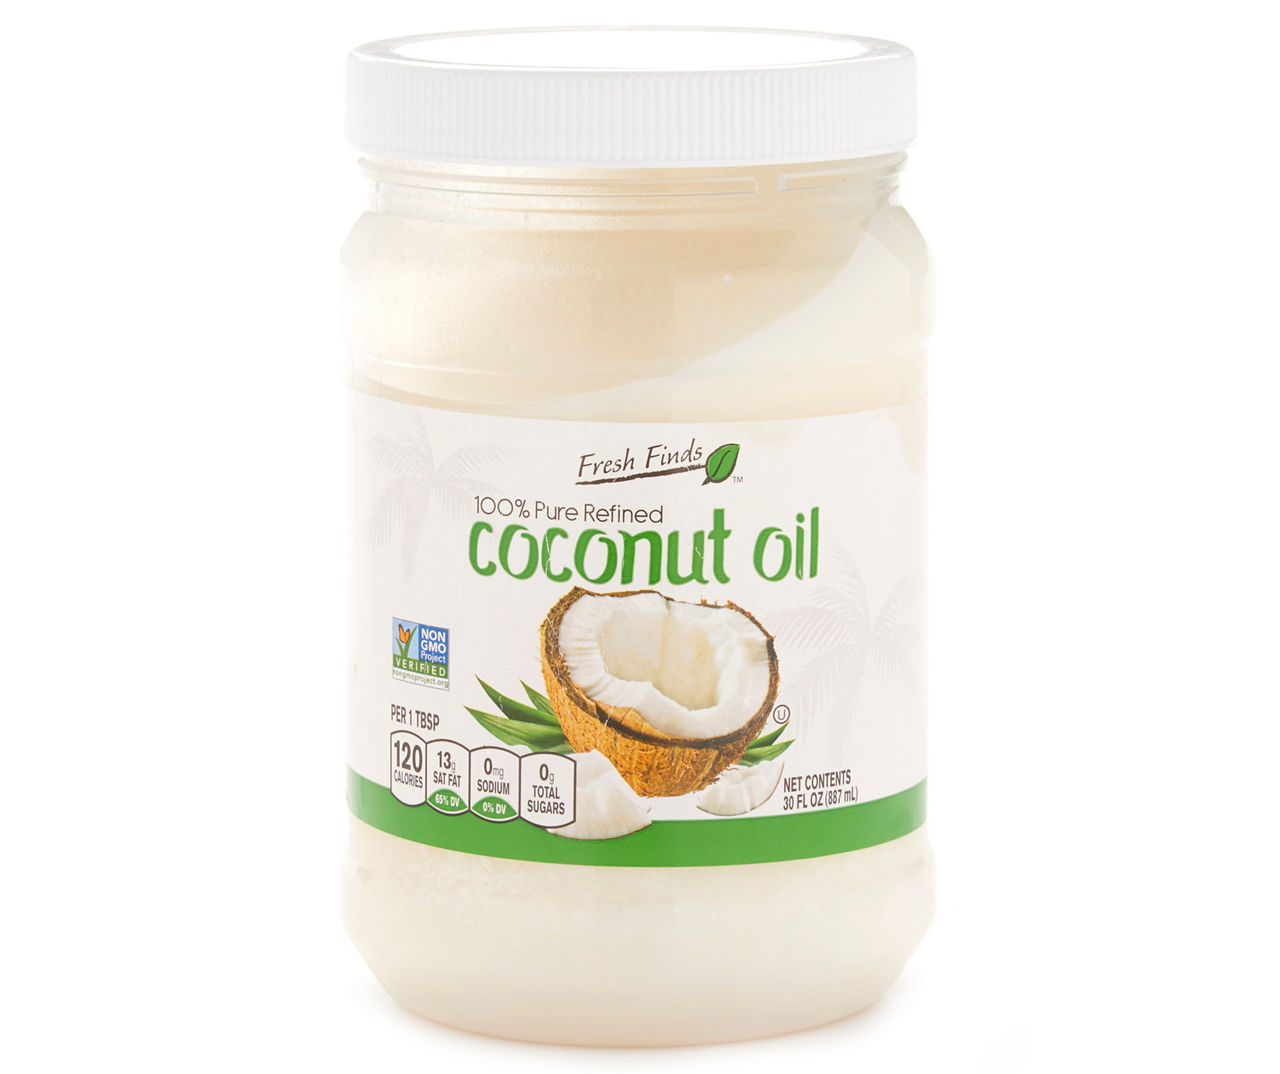 Fresh Finds 100% Pure Refined Coconut Oil, 102 Oz.